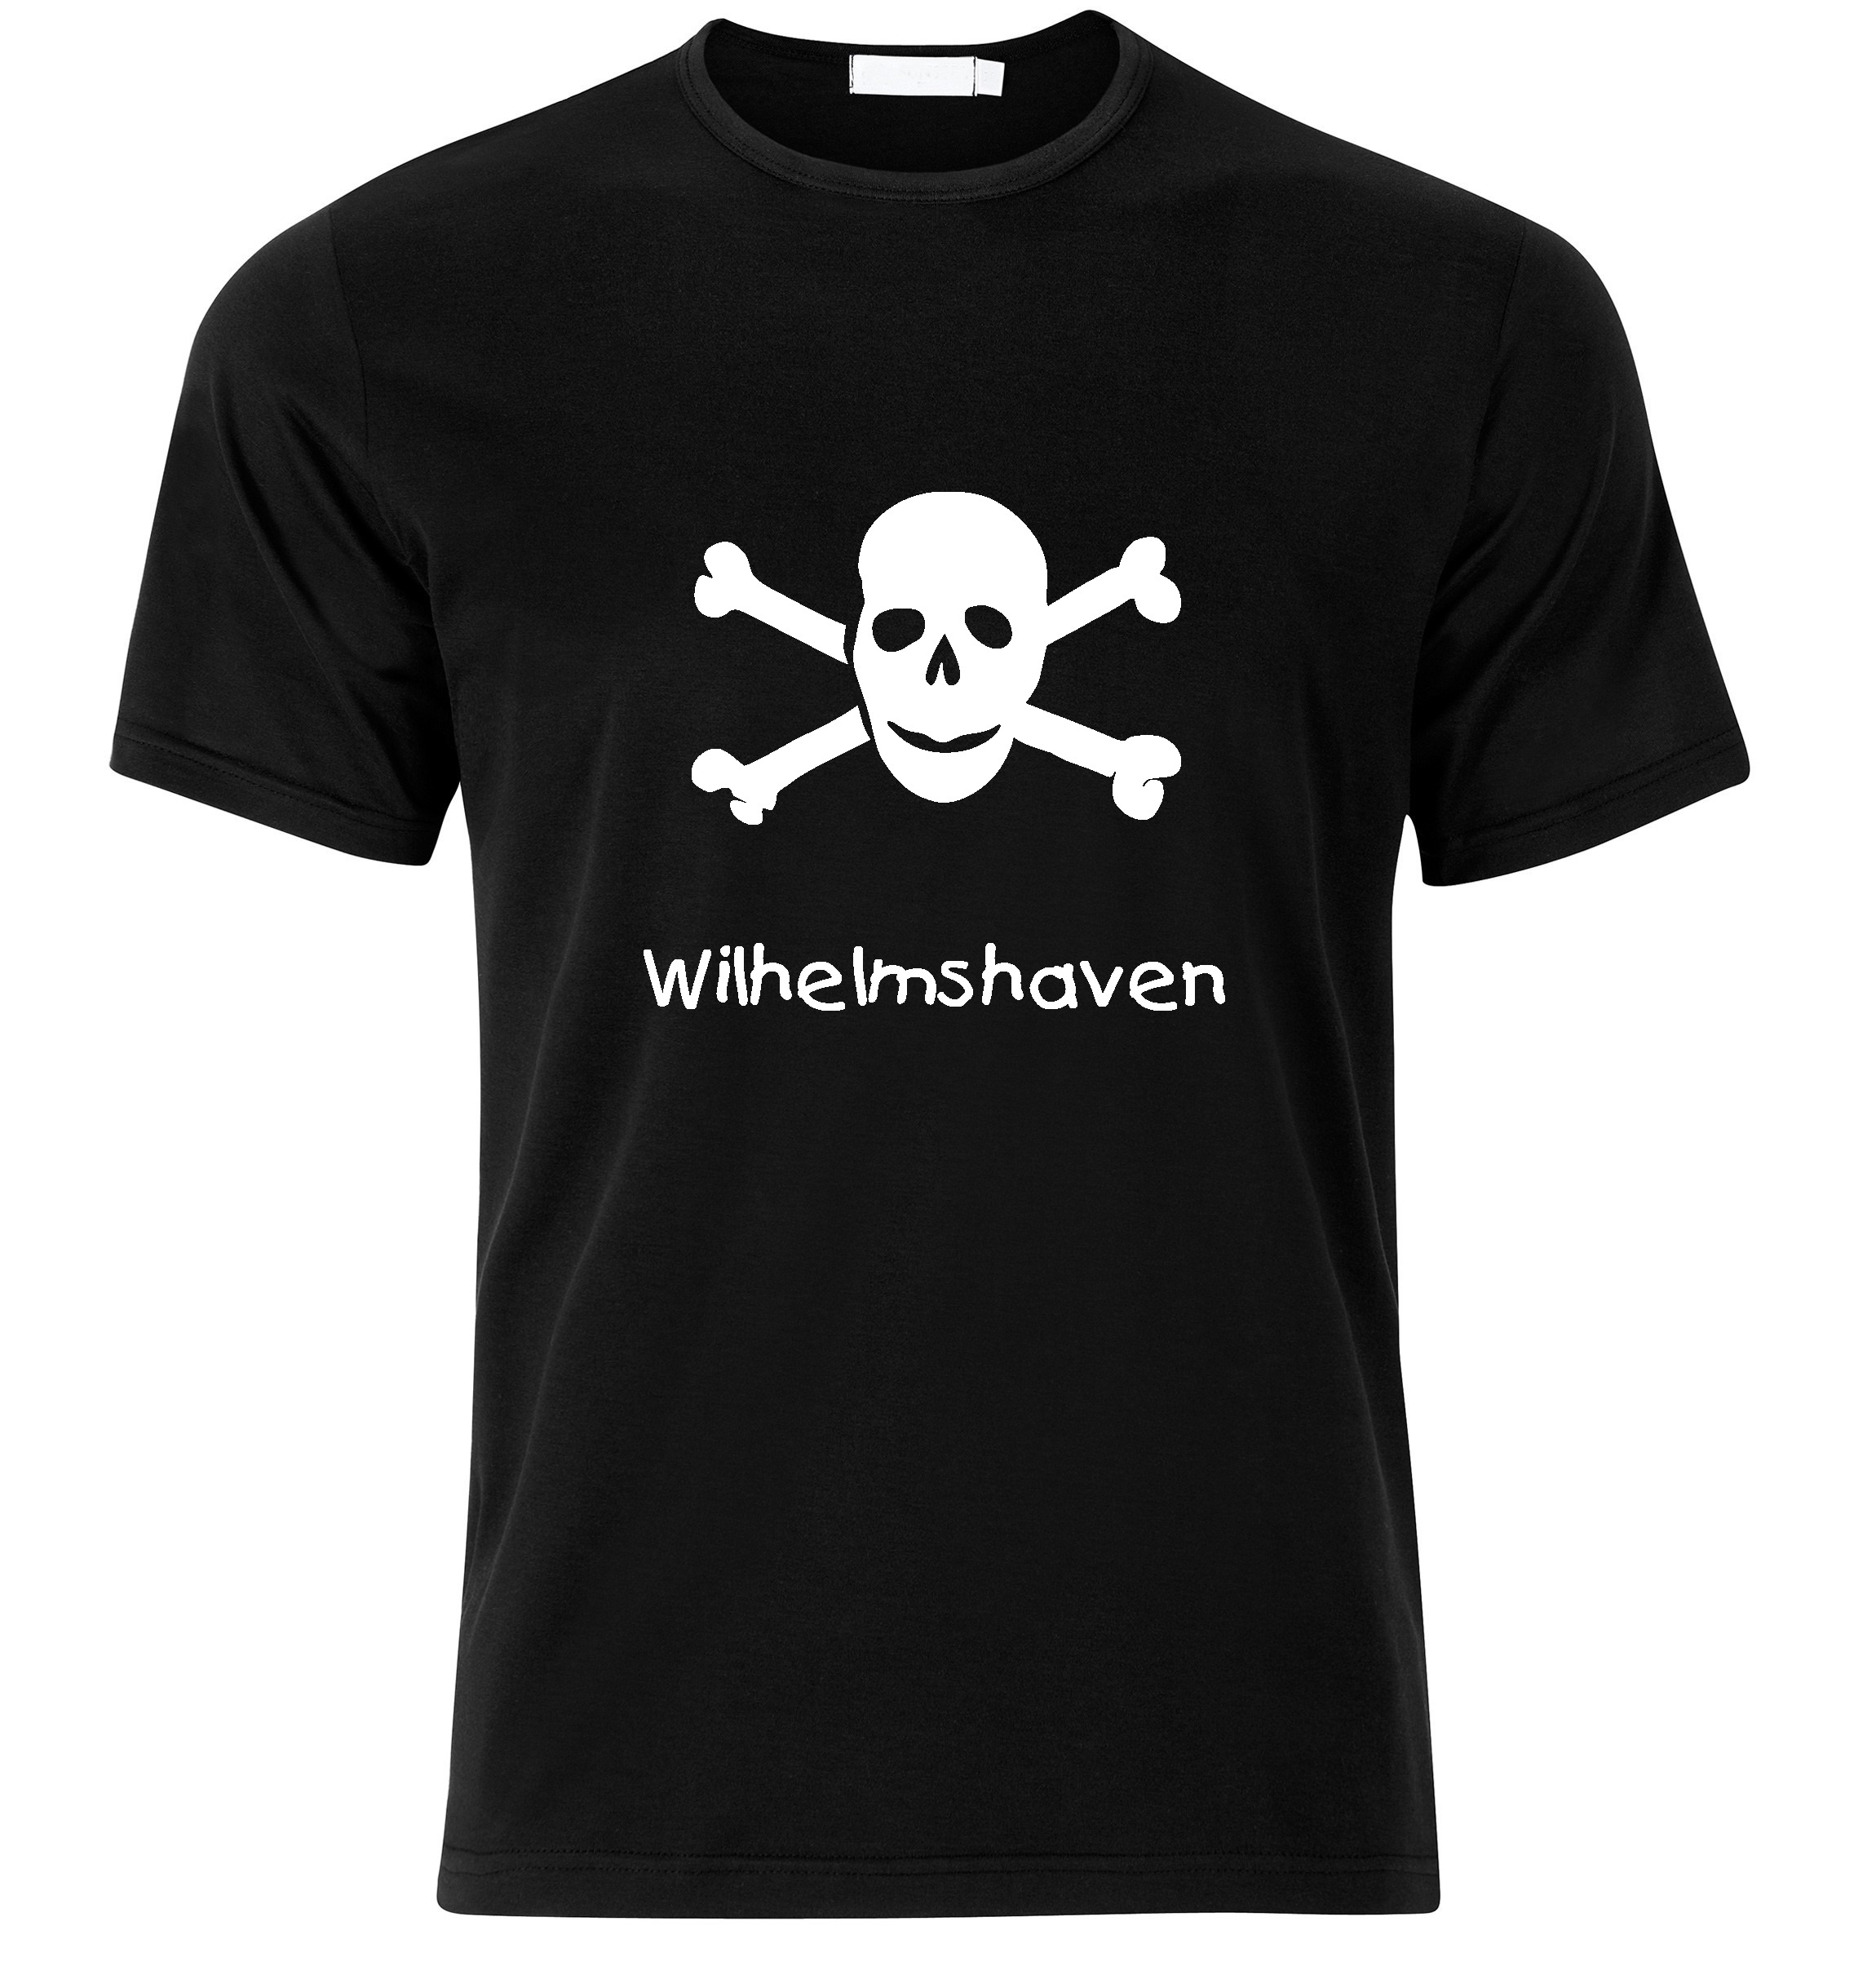 T-Shirt Wilhelmshaven Jolly Roger, Totenkopf